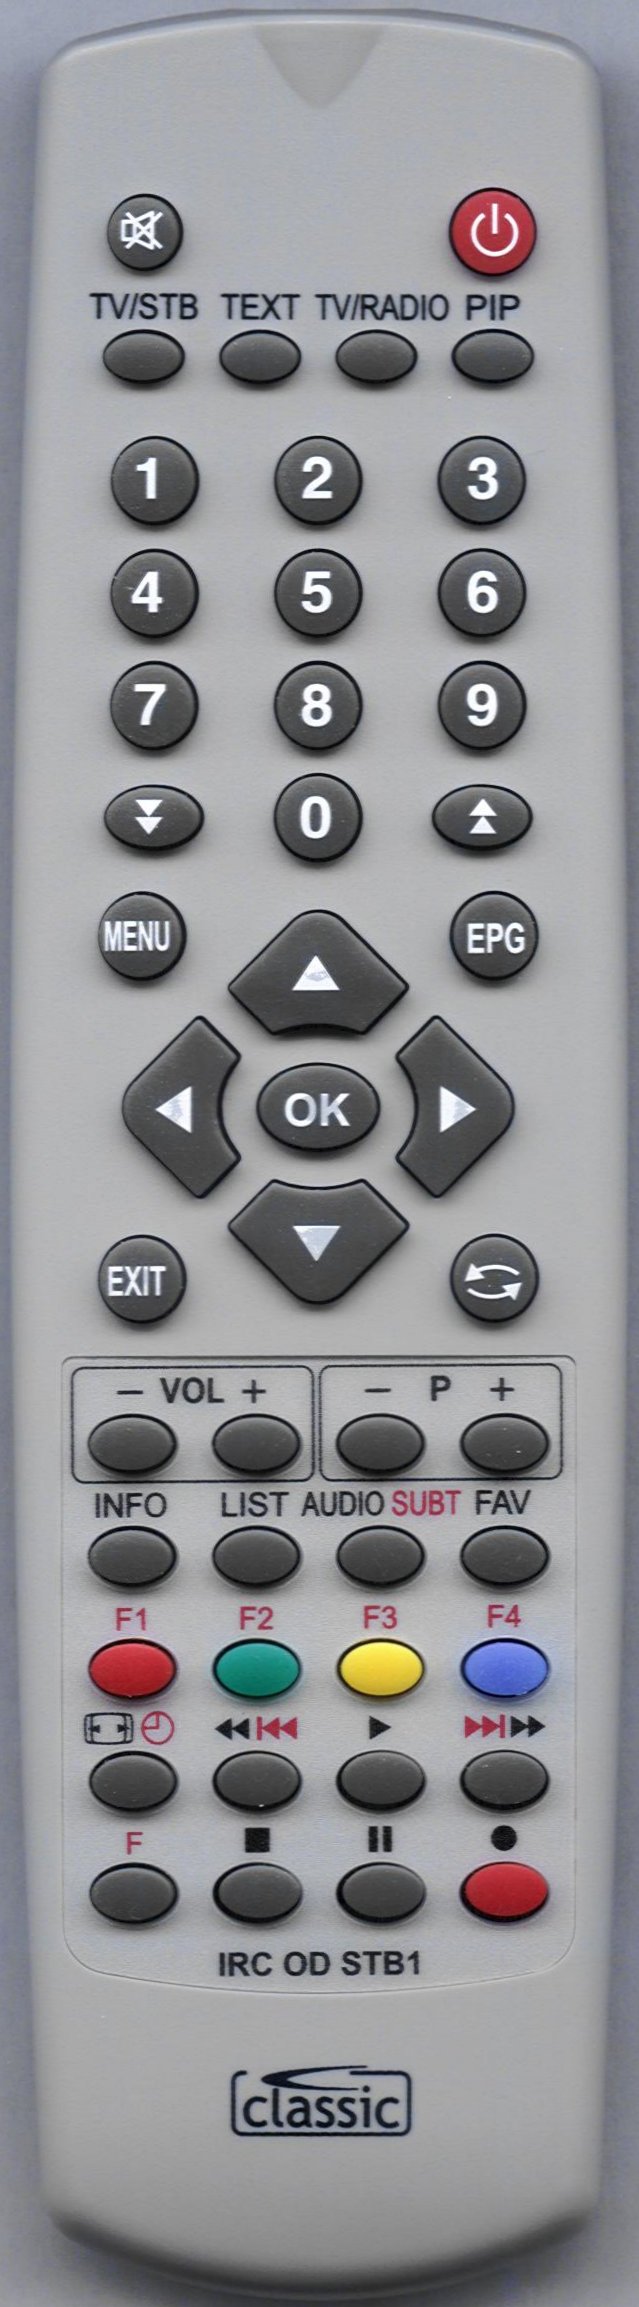 LOGISAT 1700 HD Remote Control